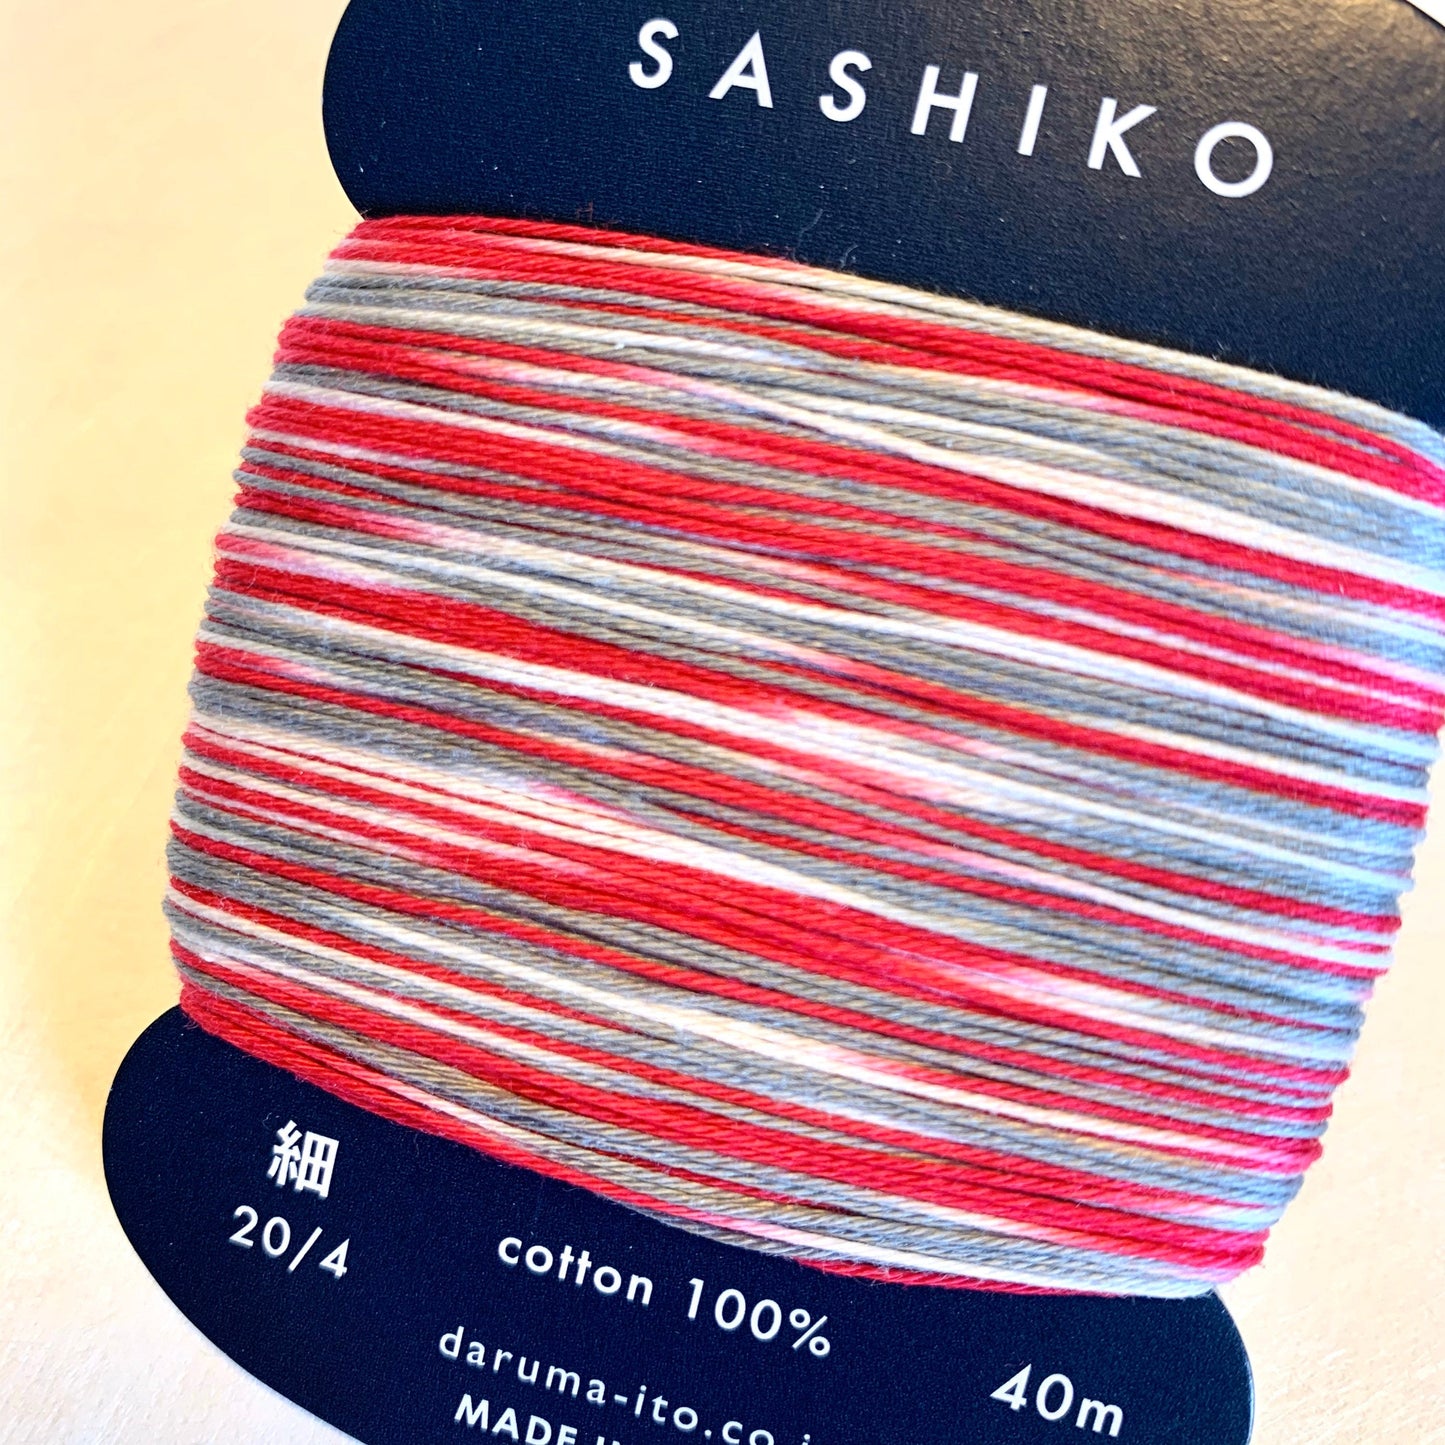 Daruma #403 MORNING GLORY variegated red white and gray Japanese Cotton SASHIKO thread 40 meter skein 20/4